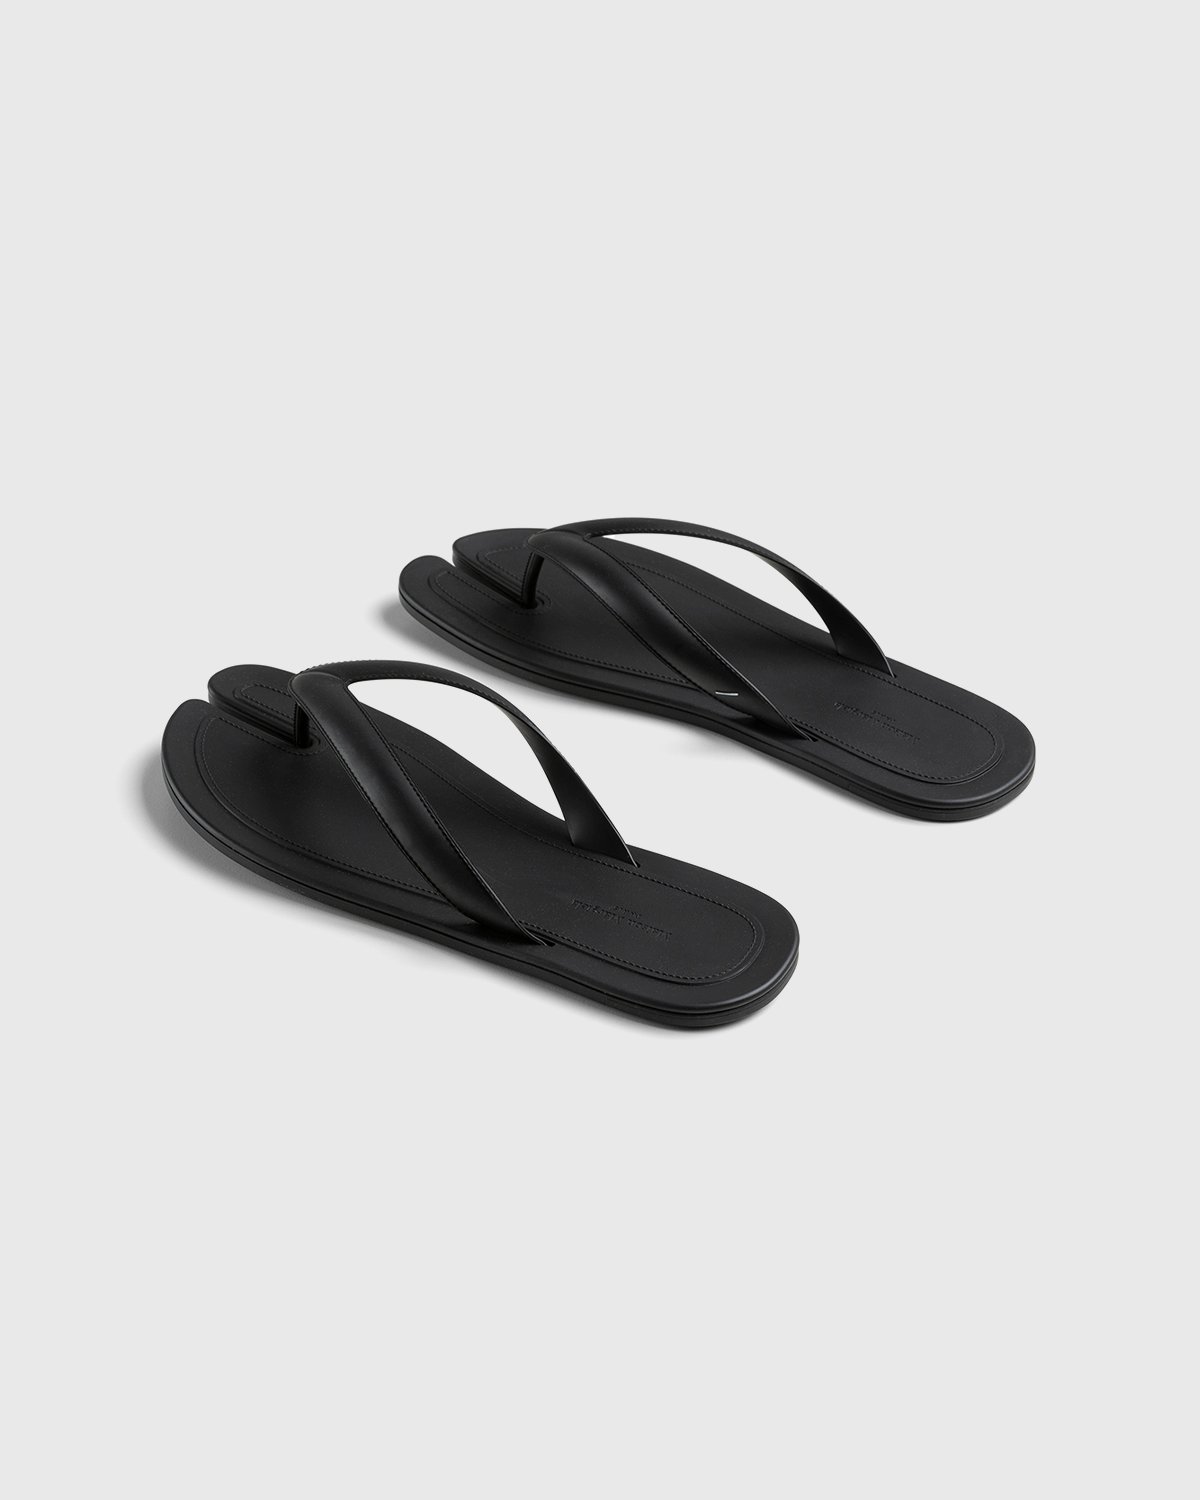 Maison Margiela – Tabi Flip-Flops Black | Highsnobiety Shop